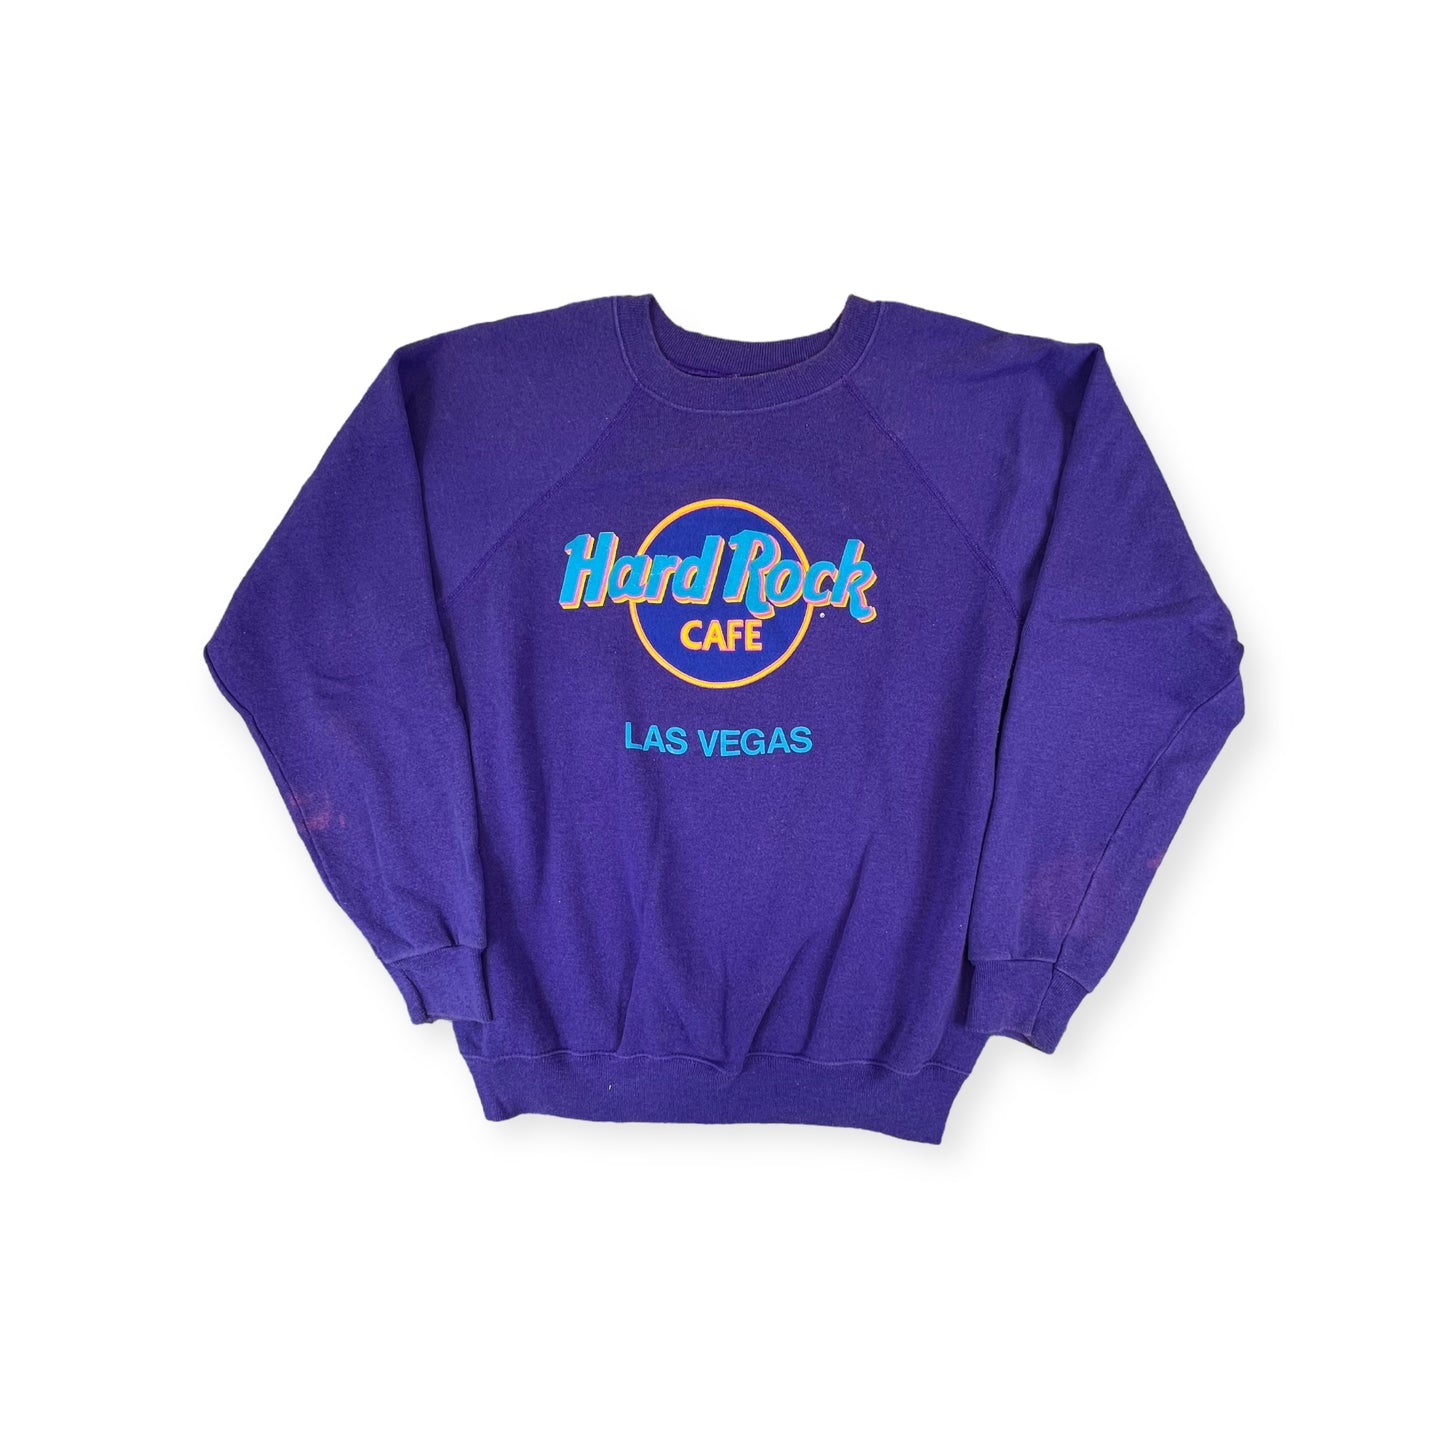 Vintage Hard Rock Cafe Las Vegas Sweatshirt (M)